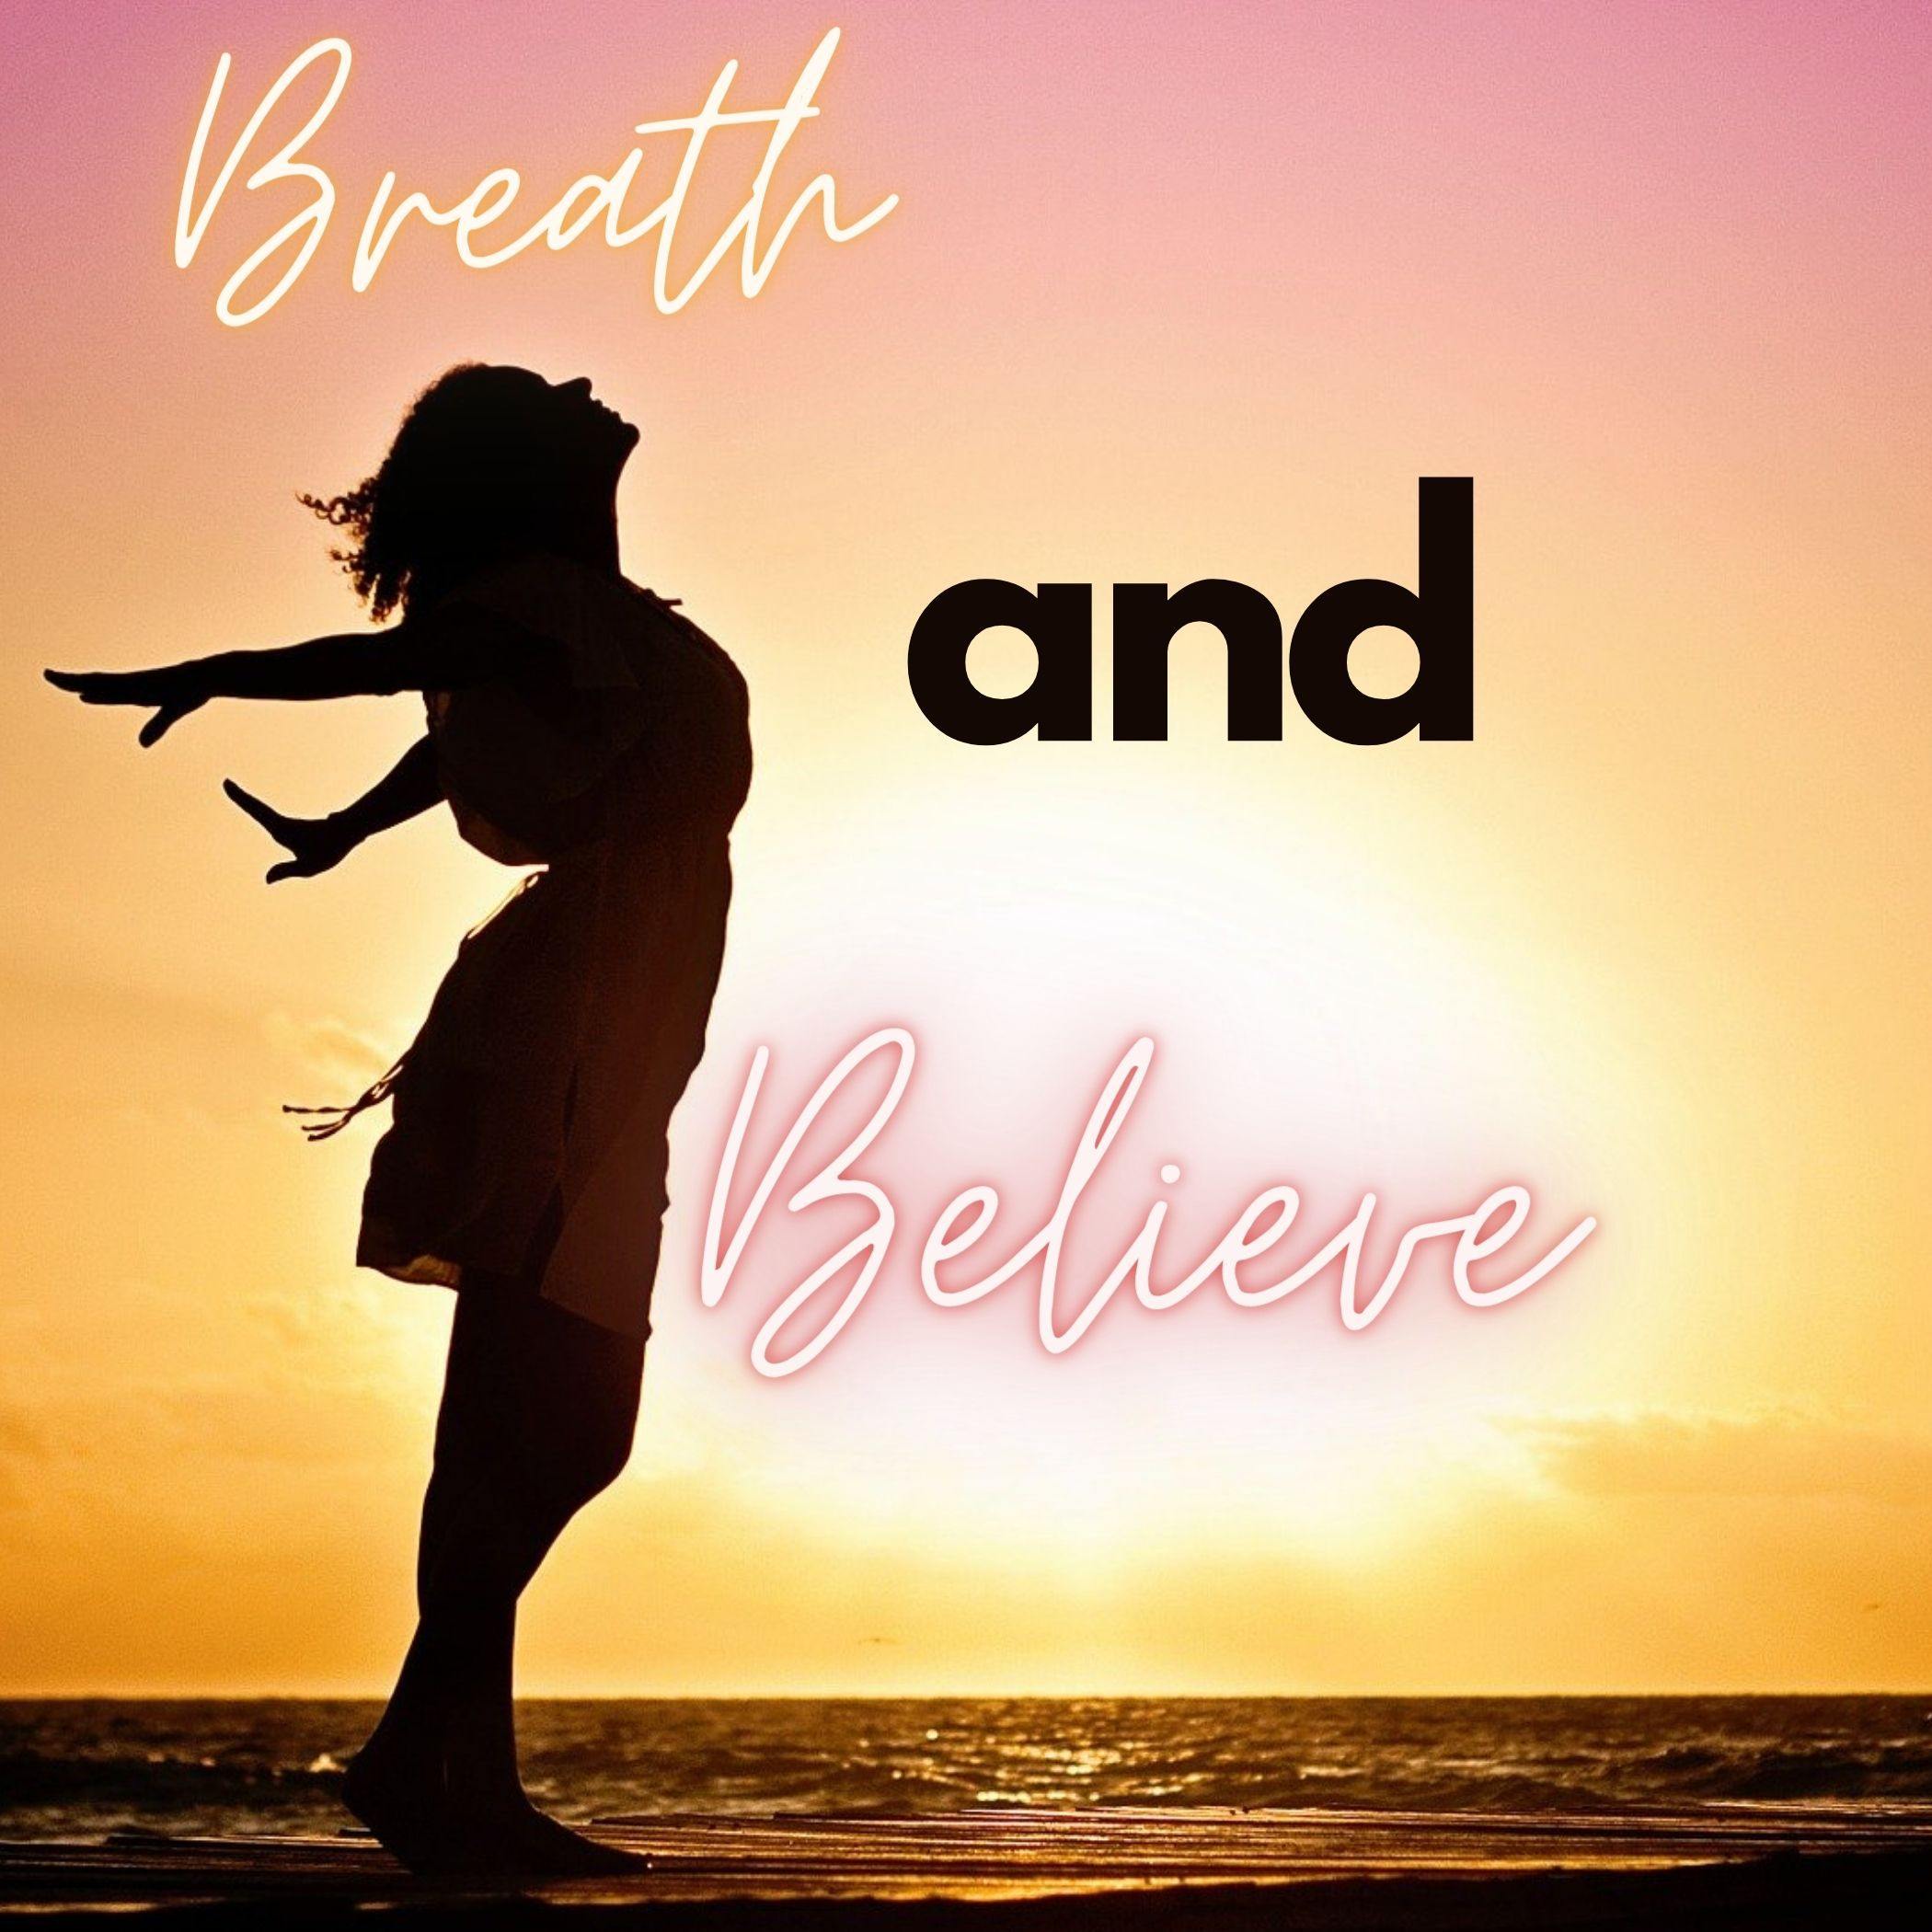 💨 Breathe and Believe